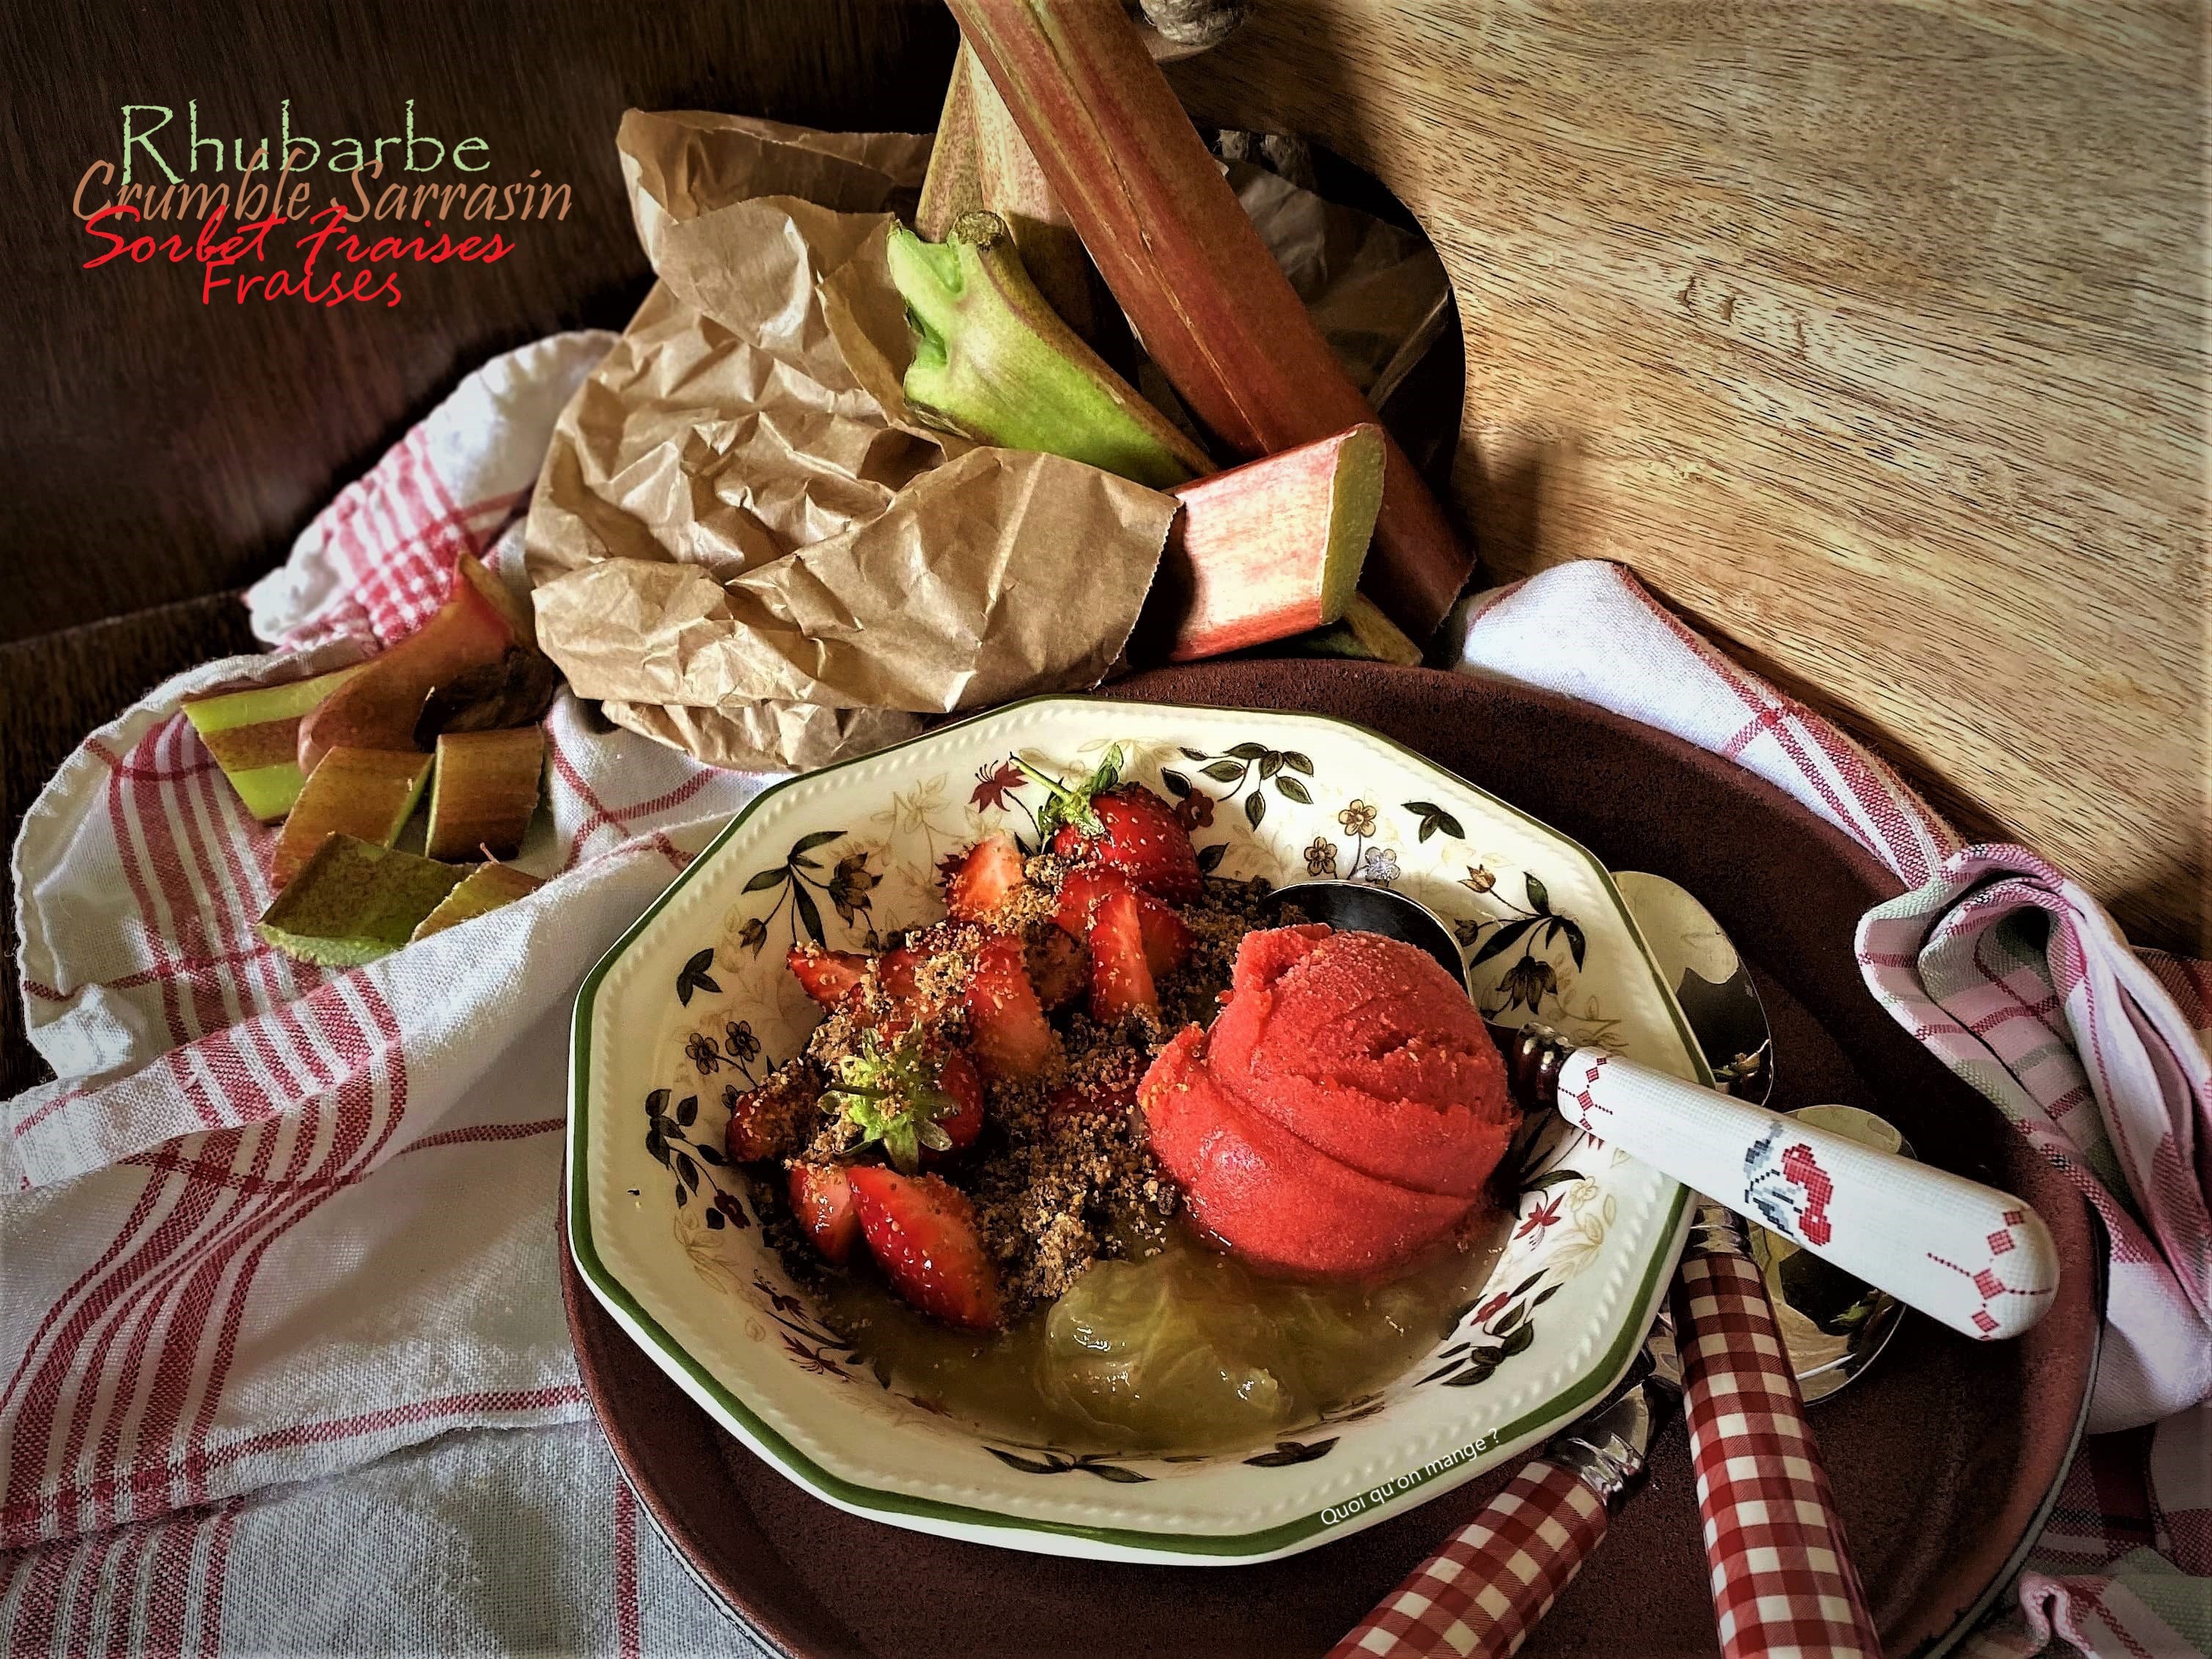 Compotée de rhubarbe – crumble sarrasin – fraises fraîches en 2 textures